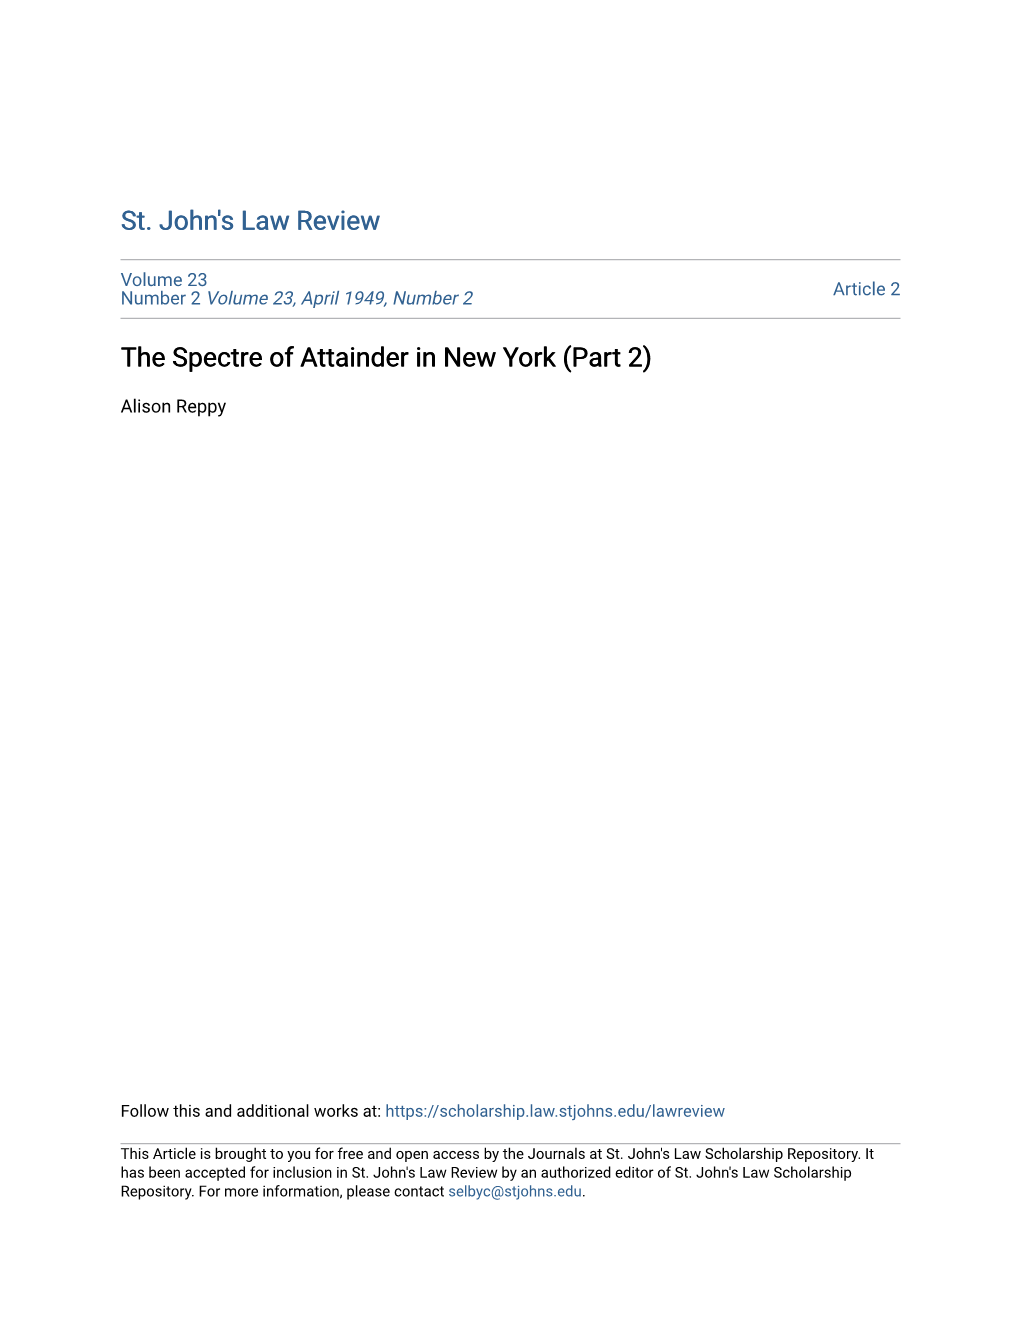 The Spectre of Attainder in New York (Part 2)